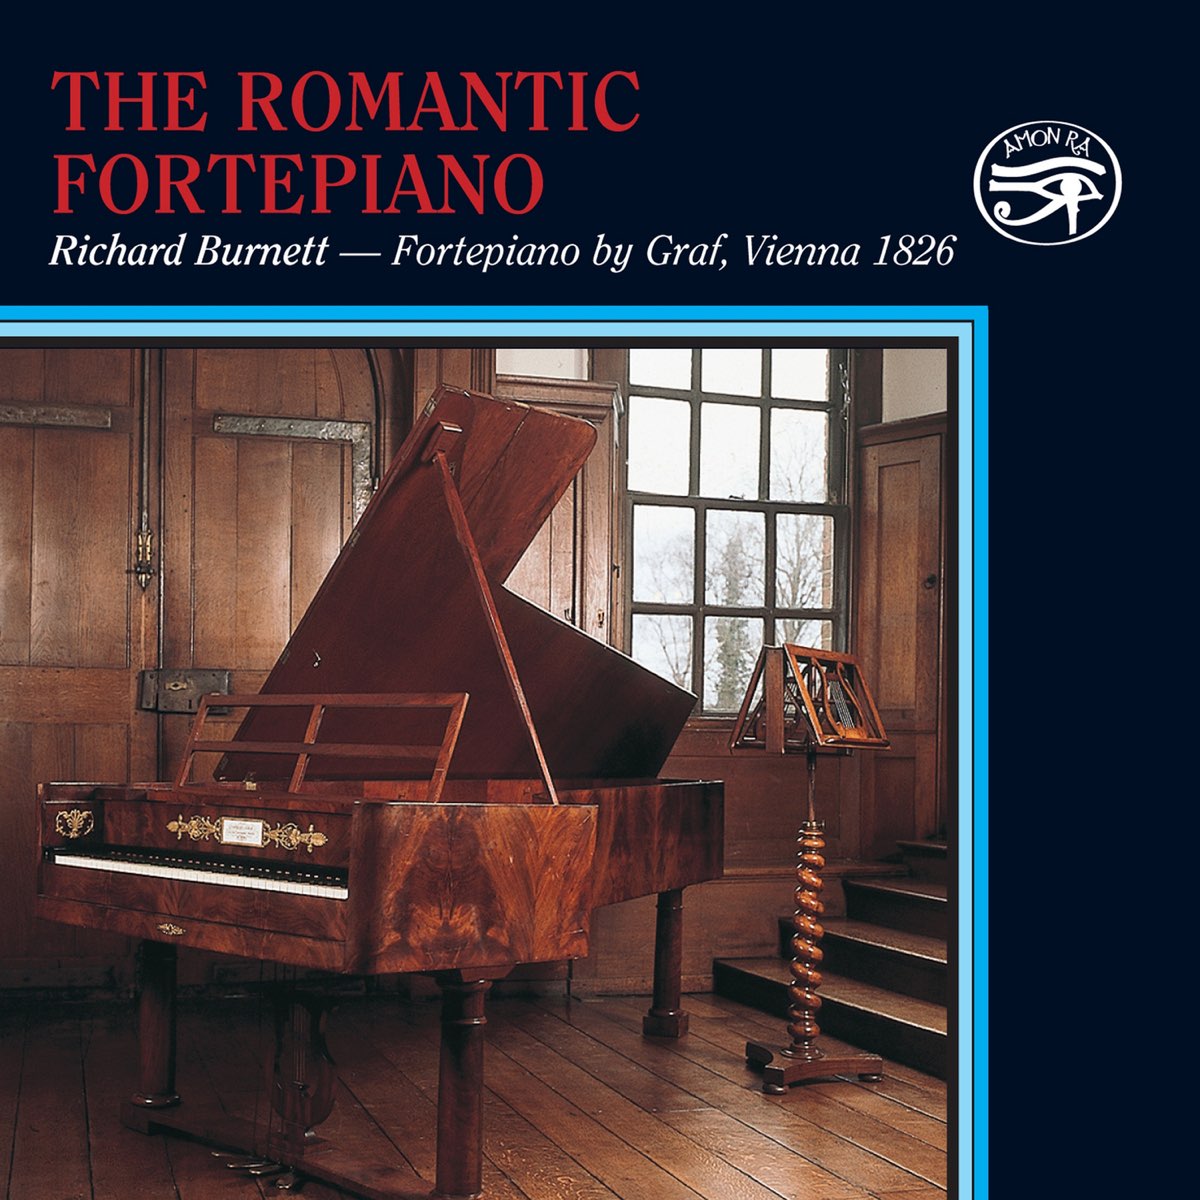 The Romantic Fortepiano - Album by Richard Burnett - Apple Music